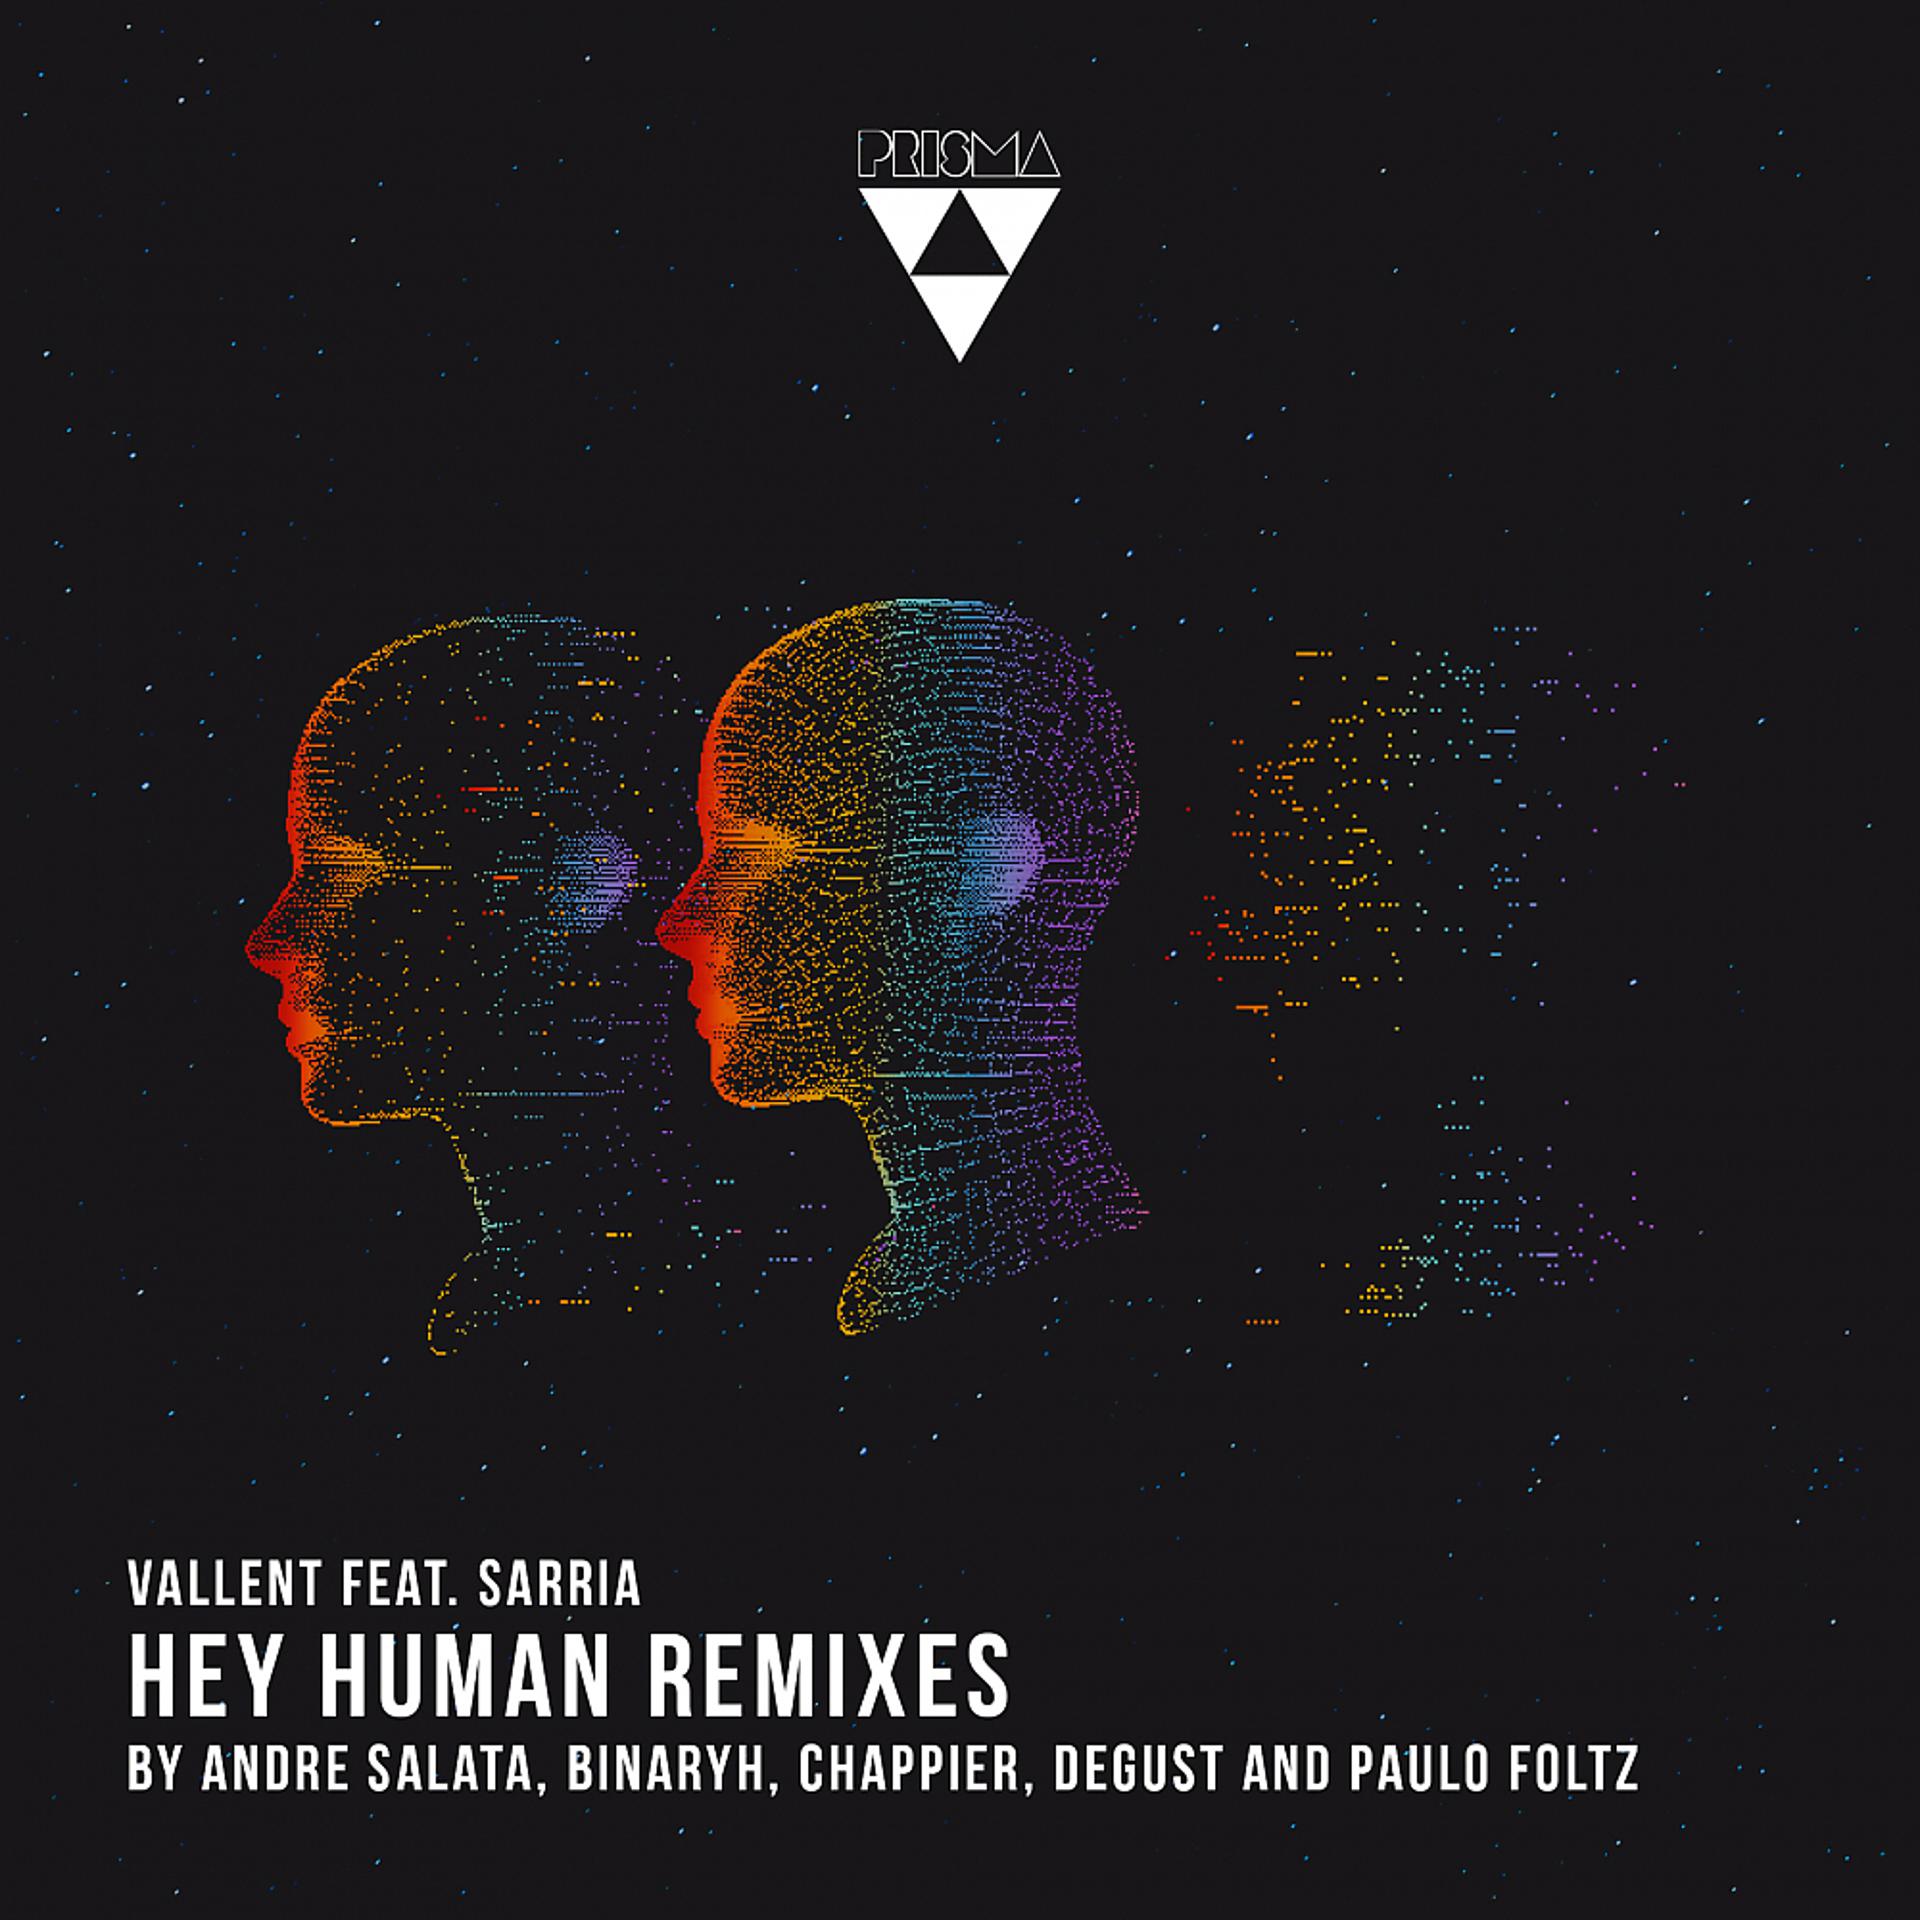 Vallent Hants. Ortus (br) - lua (Binaryh Remix). Human remix